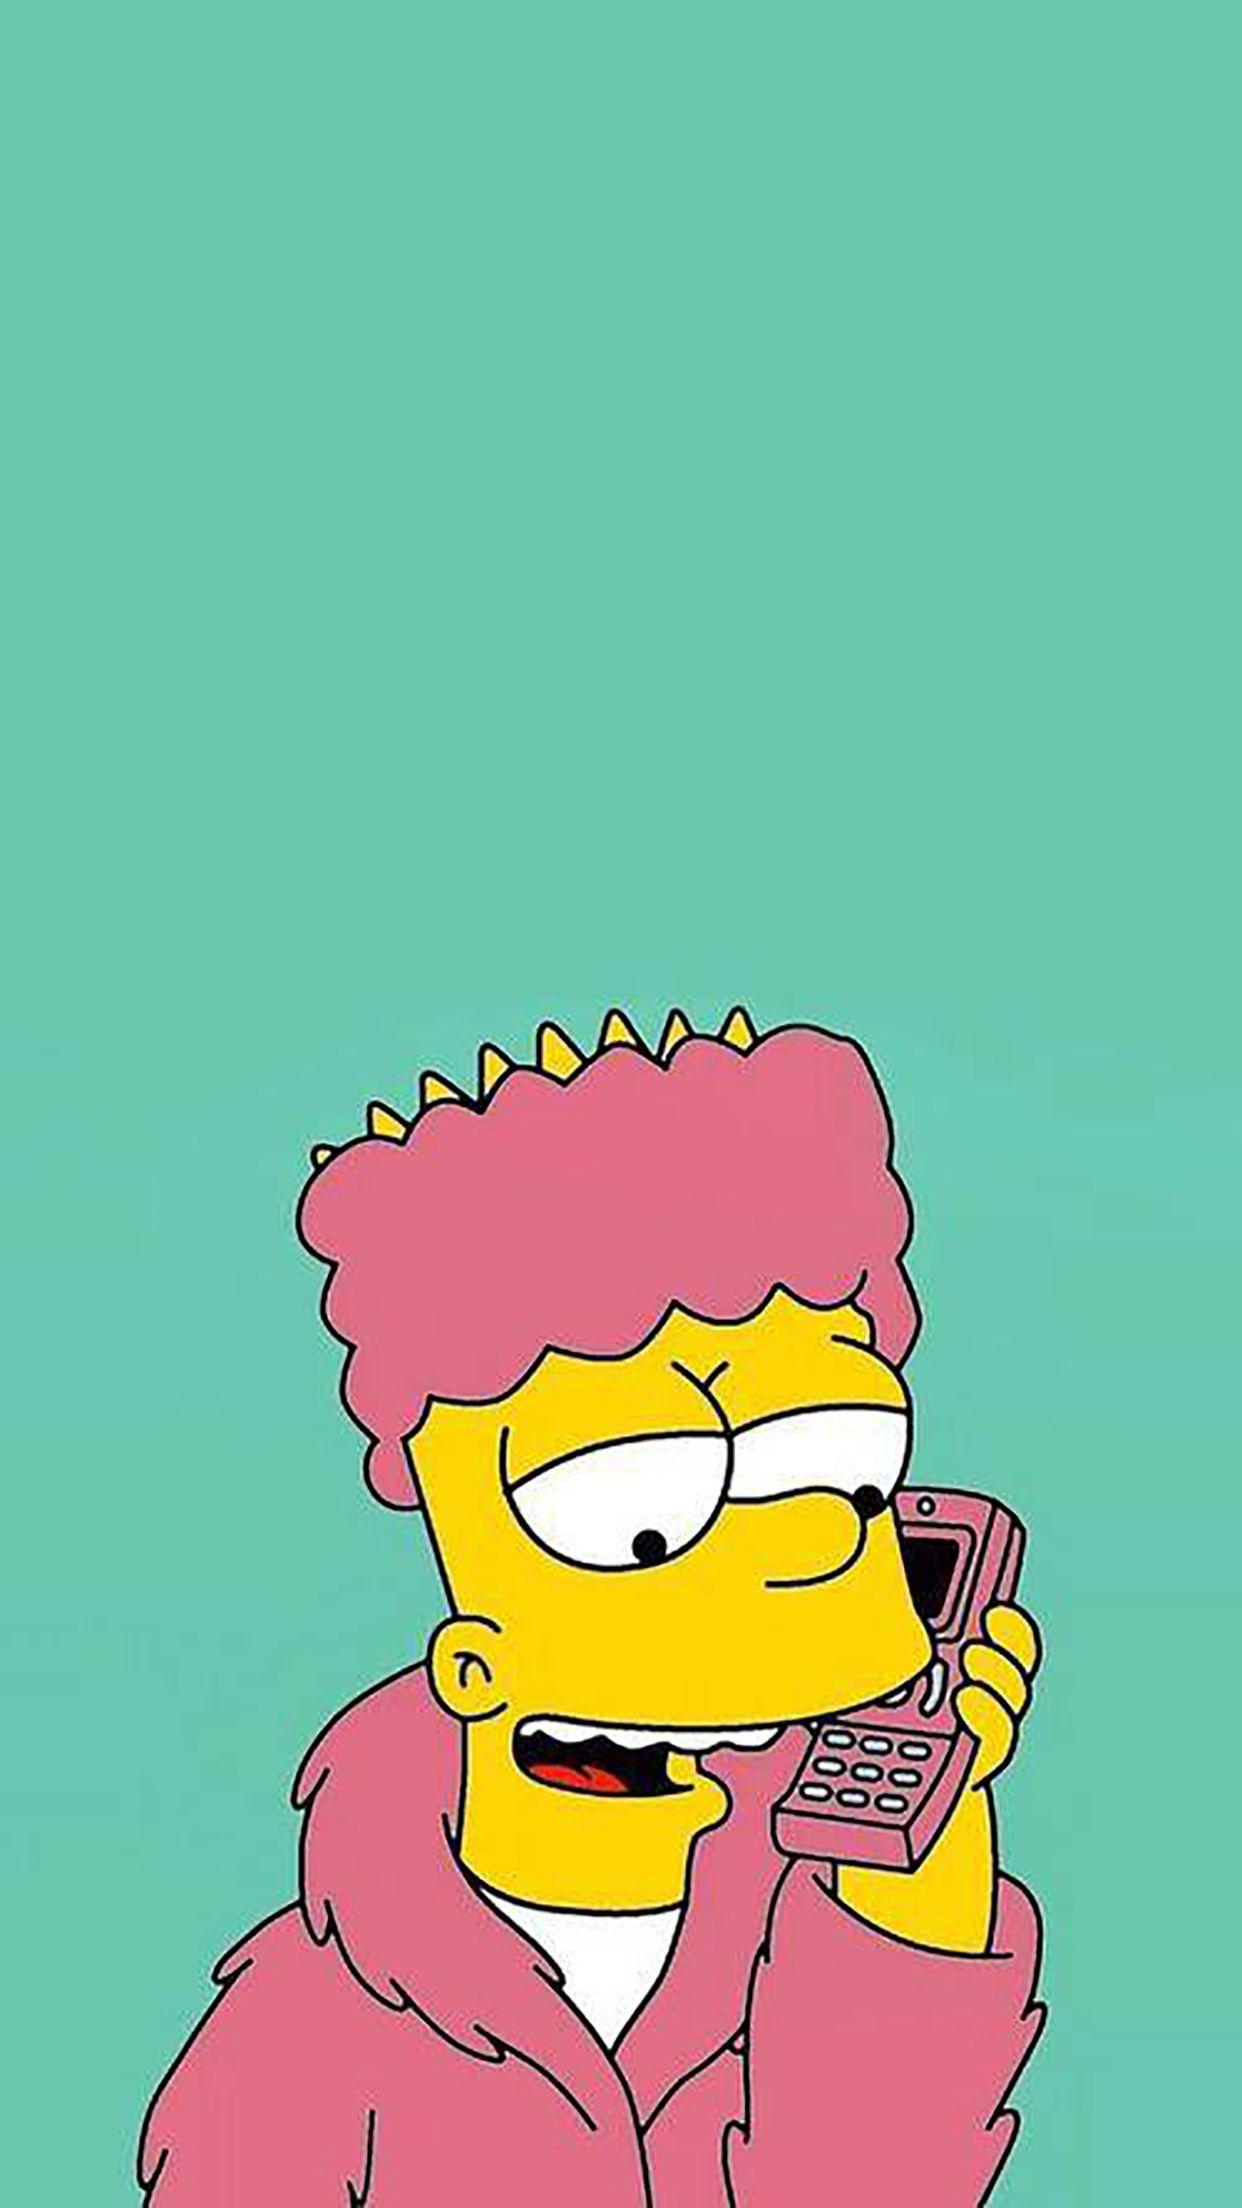 Bart Simpson Wallpaper iPhone, PC Bart Simpson Wallpaper iPhone